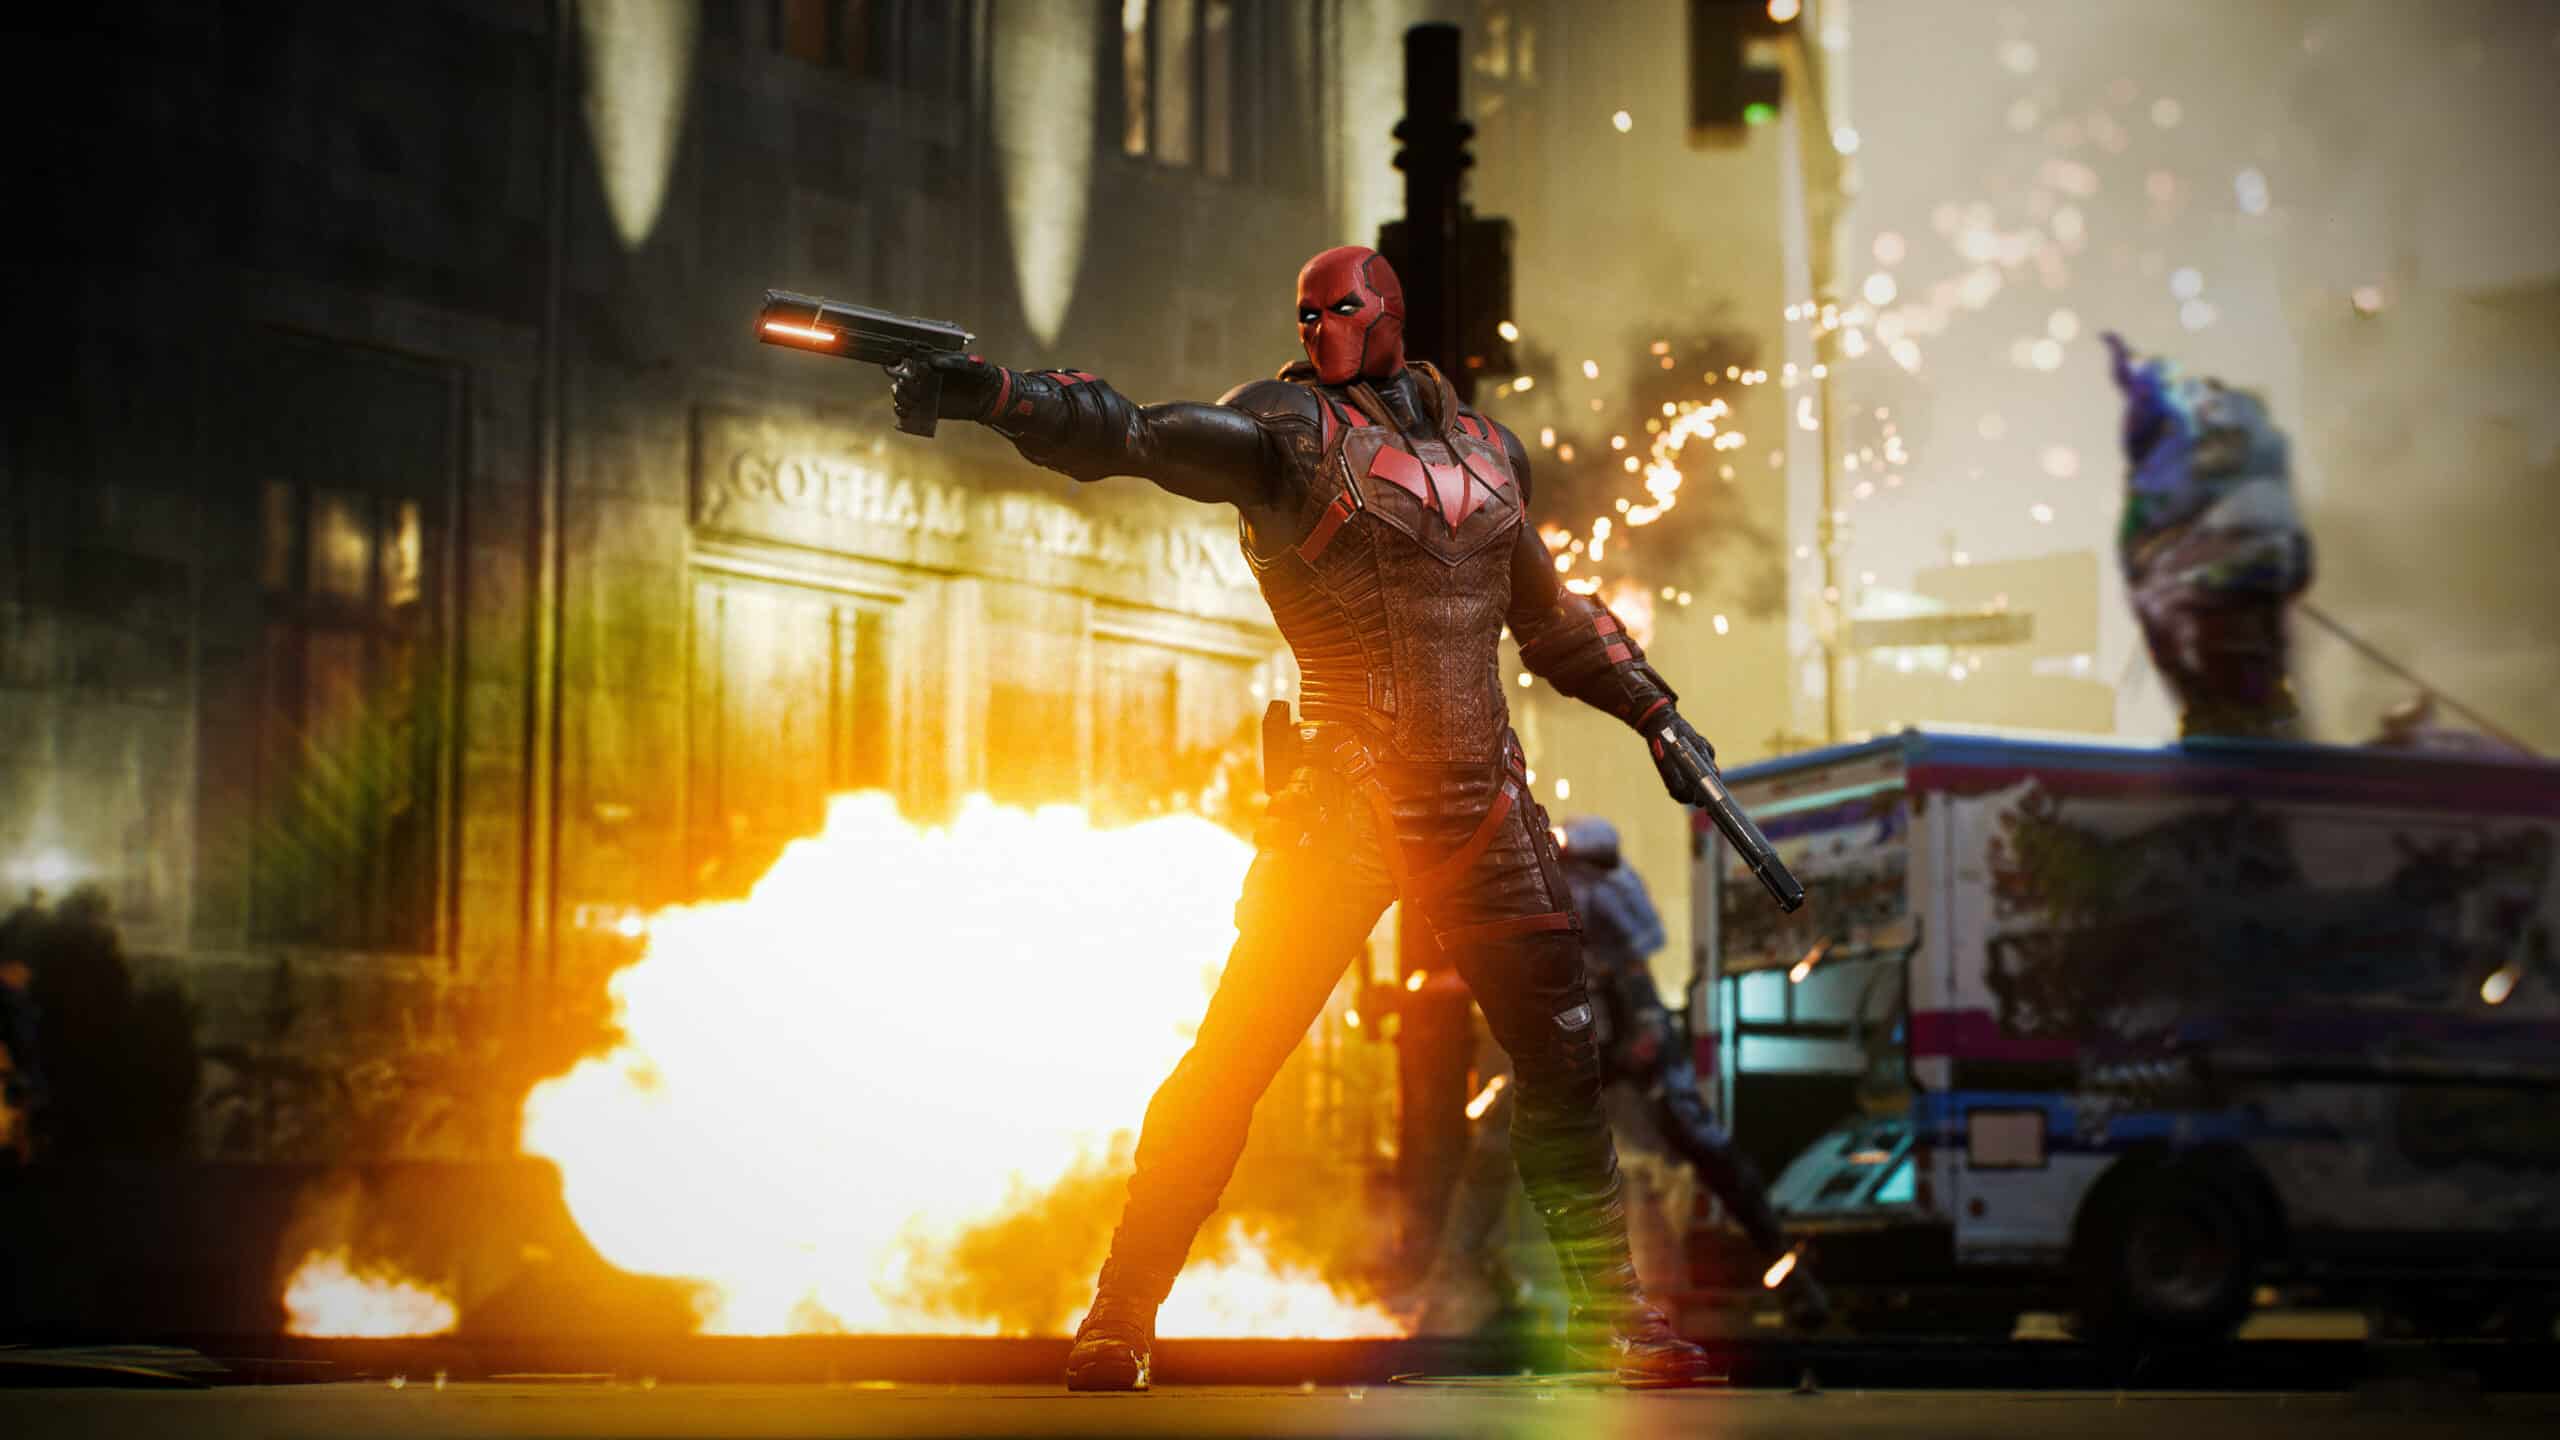 Gotham Knights Screenshot featuring Red Hood